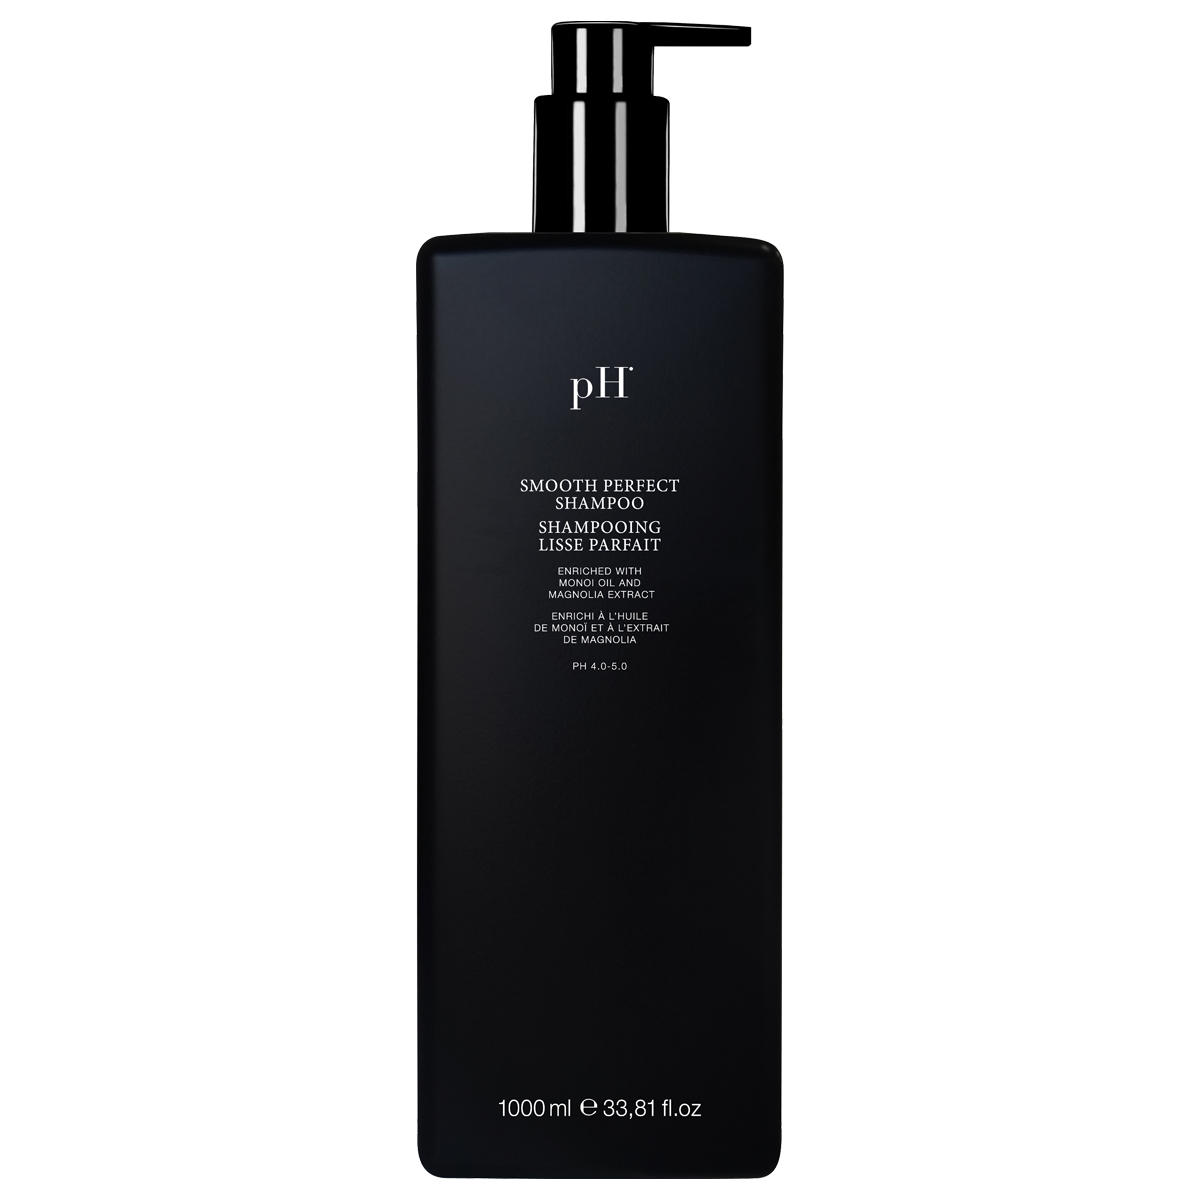 pH Smooth Perfect Shampoo 1 Liter - 1